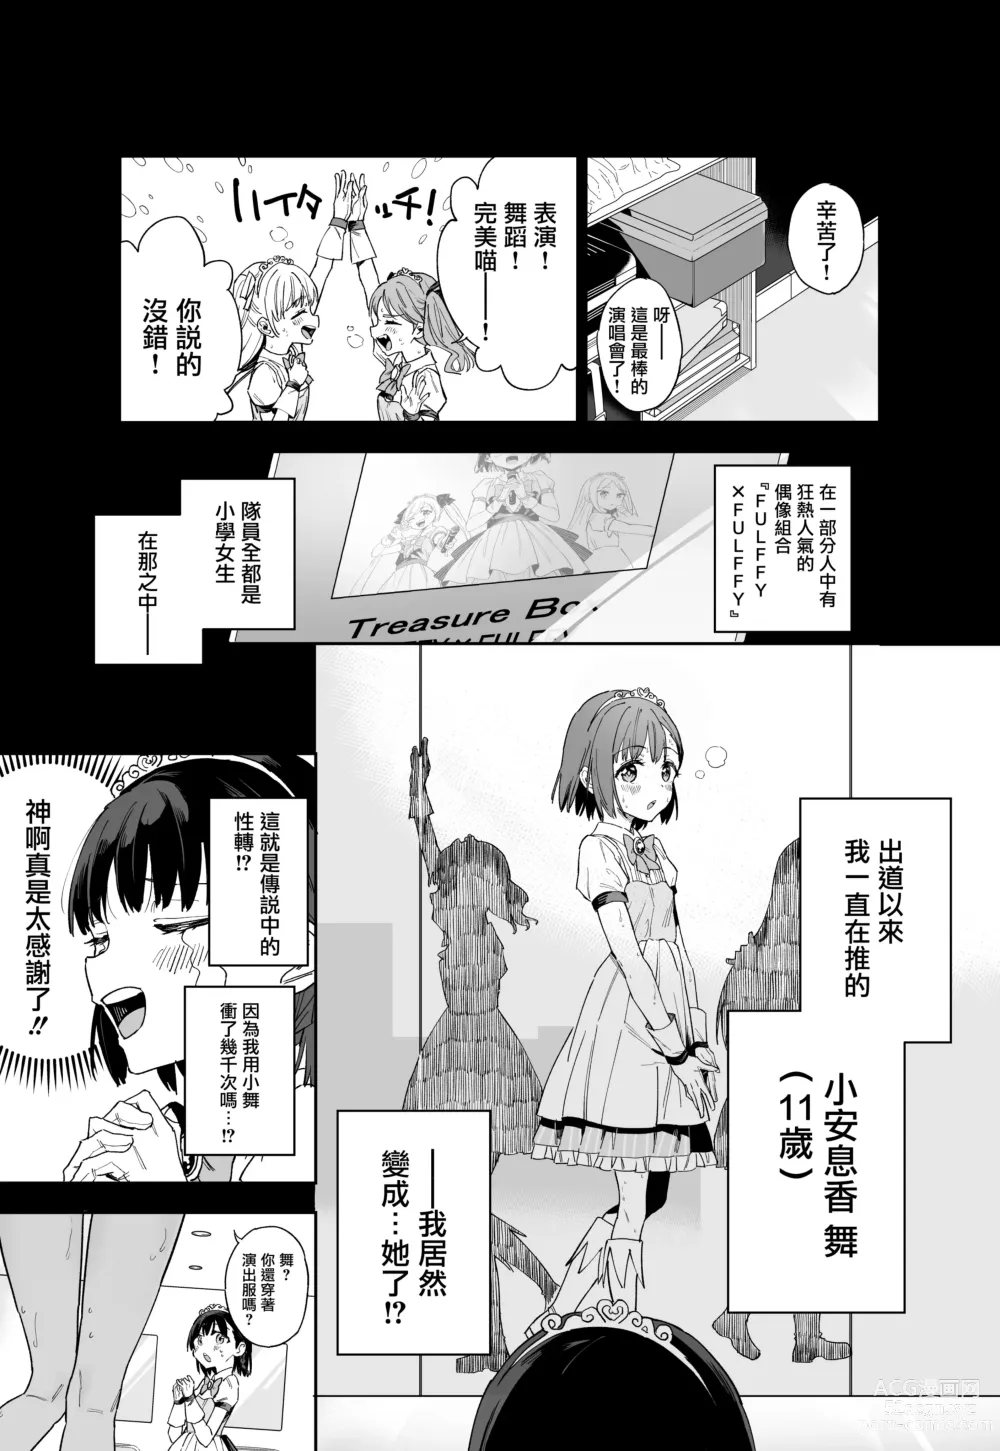 Page 7 of doujinshi 性转成为○学女生偶像之后和所有队员百合贴贴